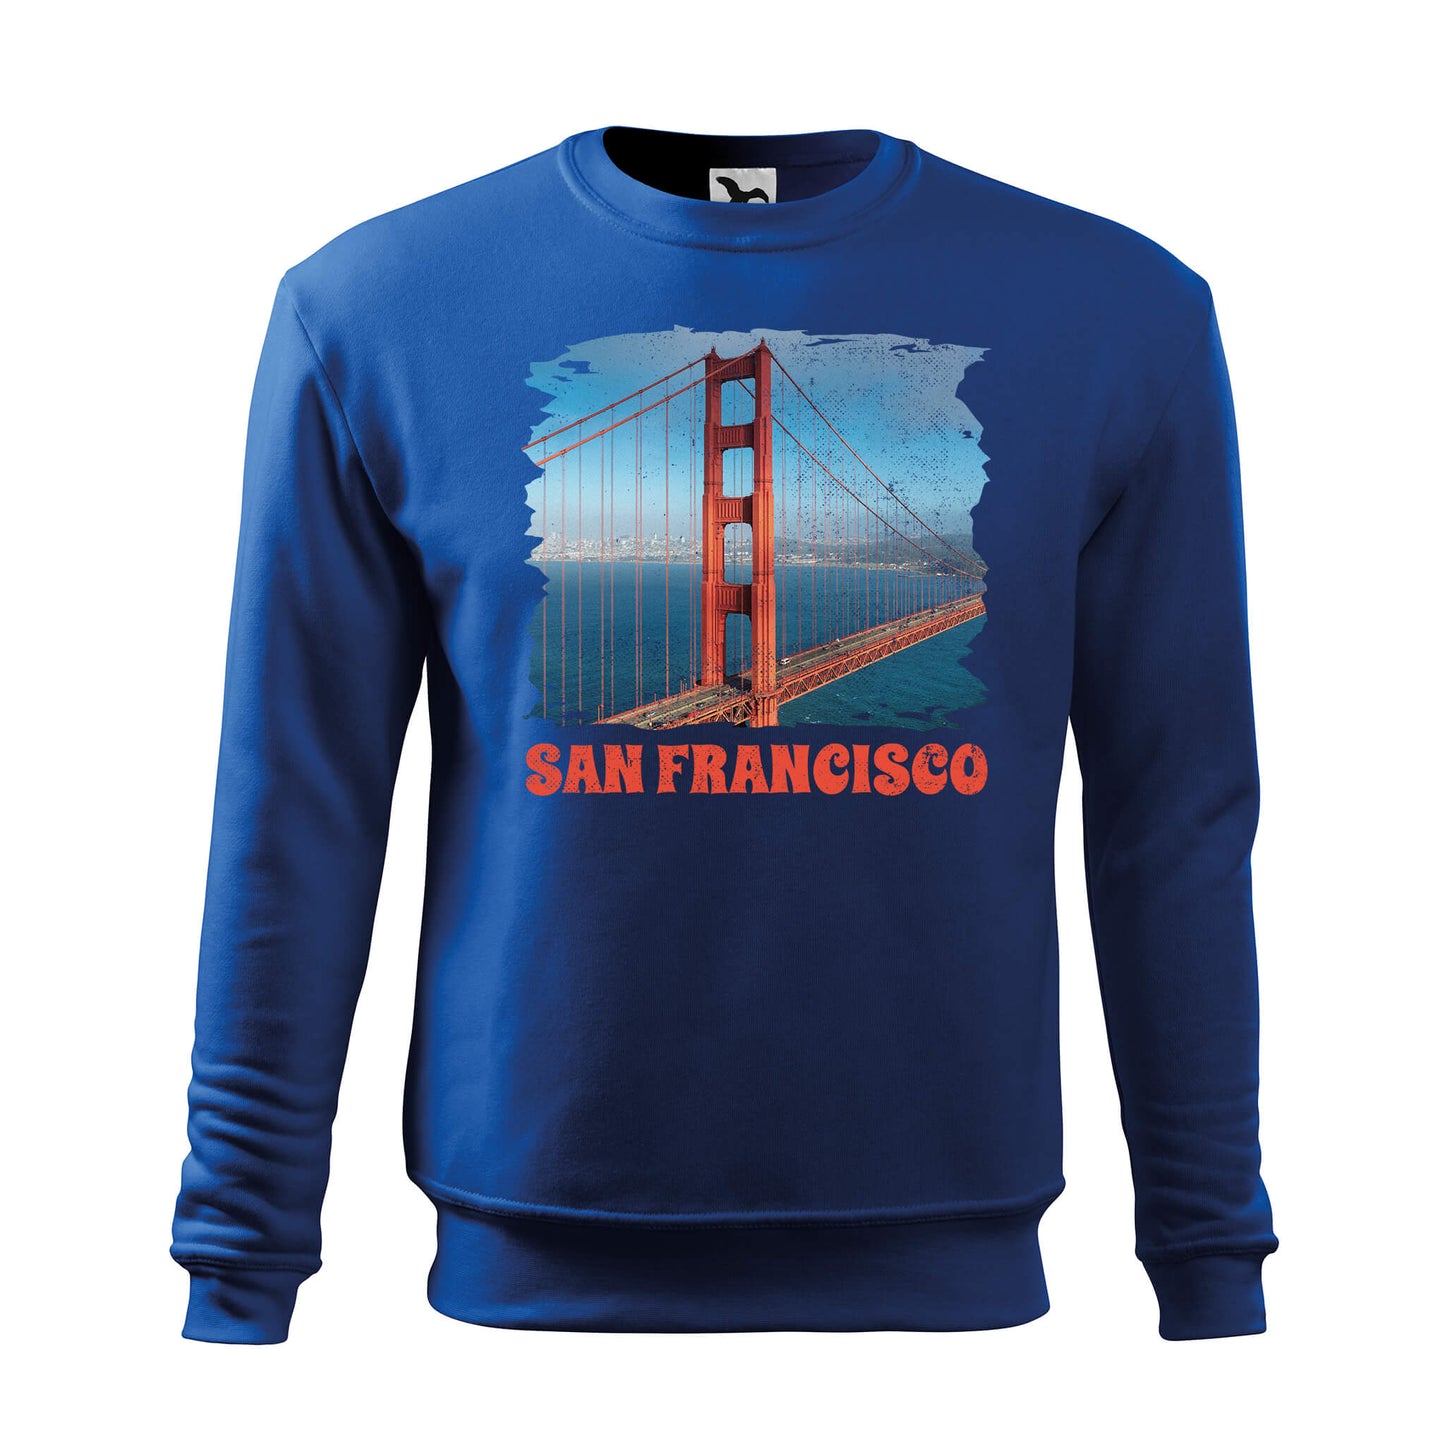 San Francisco sweatshirt - mens